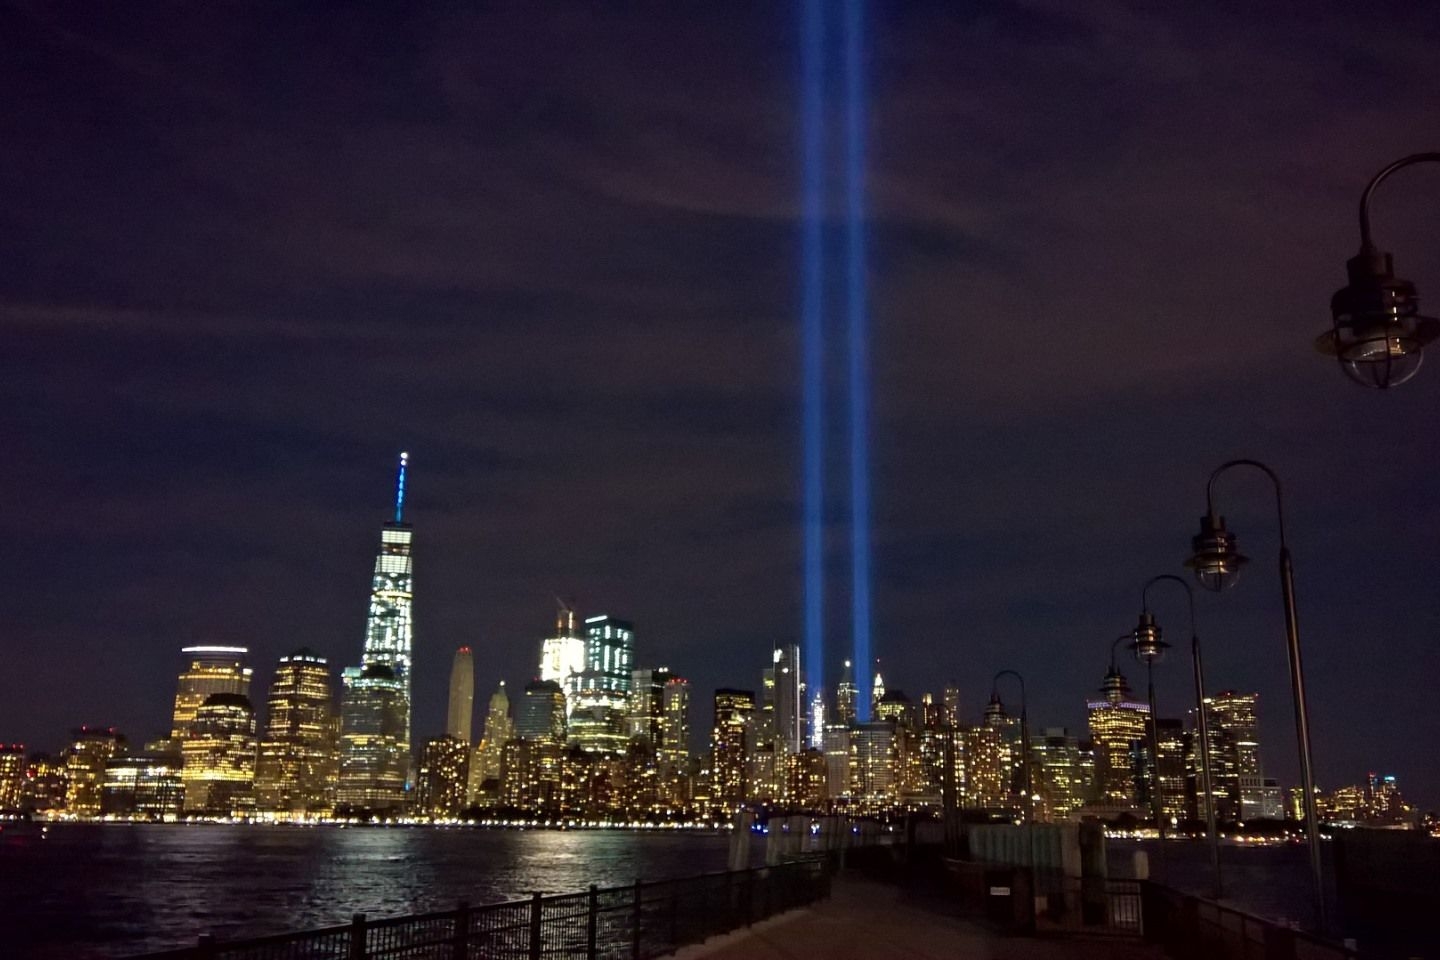 9/11 New York City Skyline World Trade Center Lights. Downloaded free from Pixabay.com